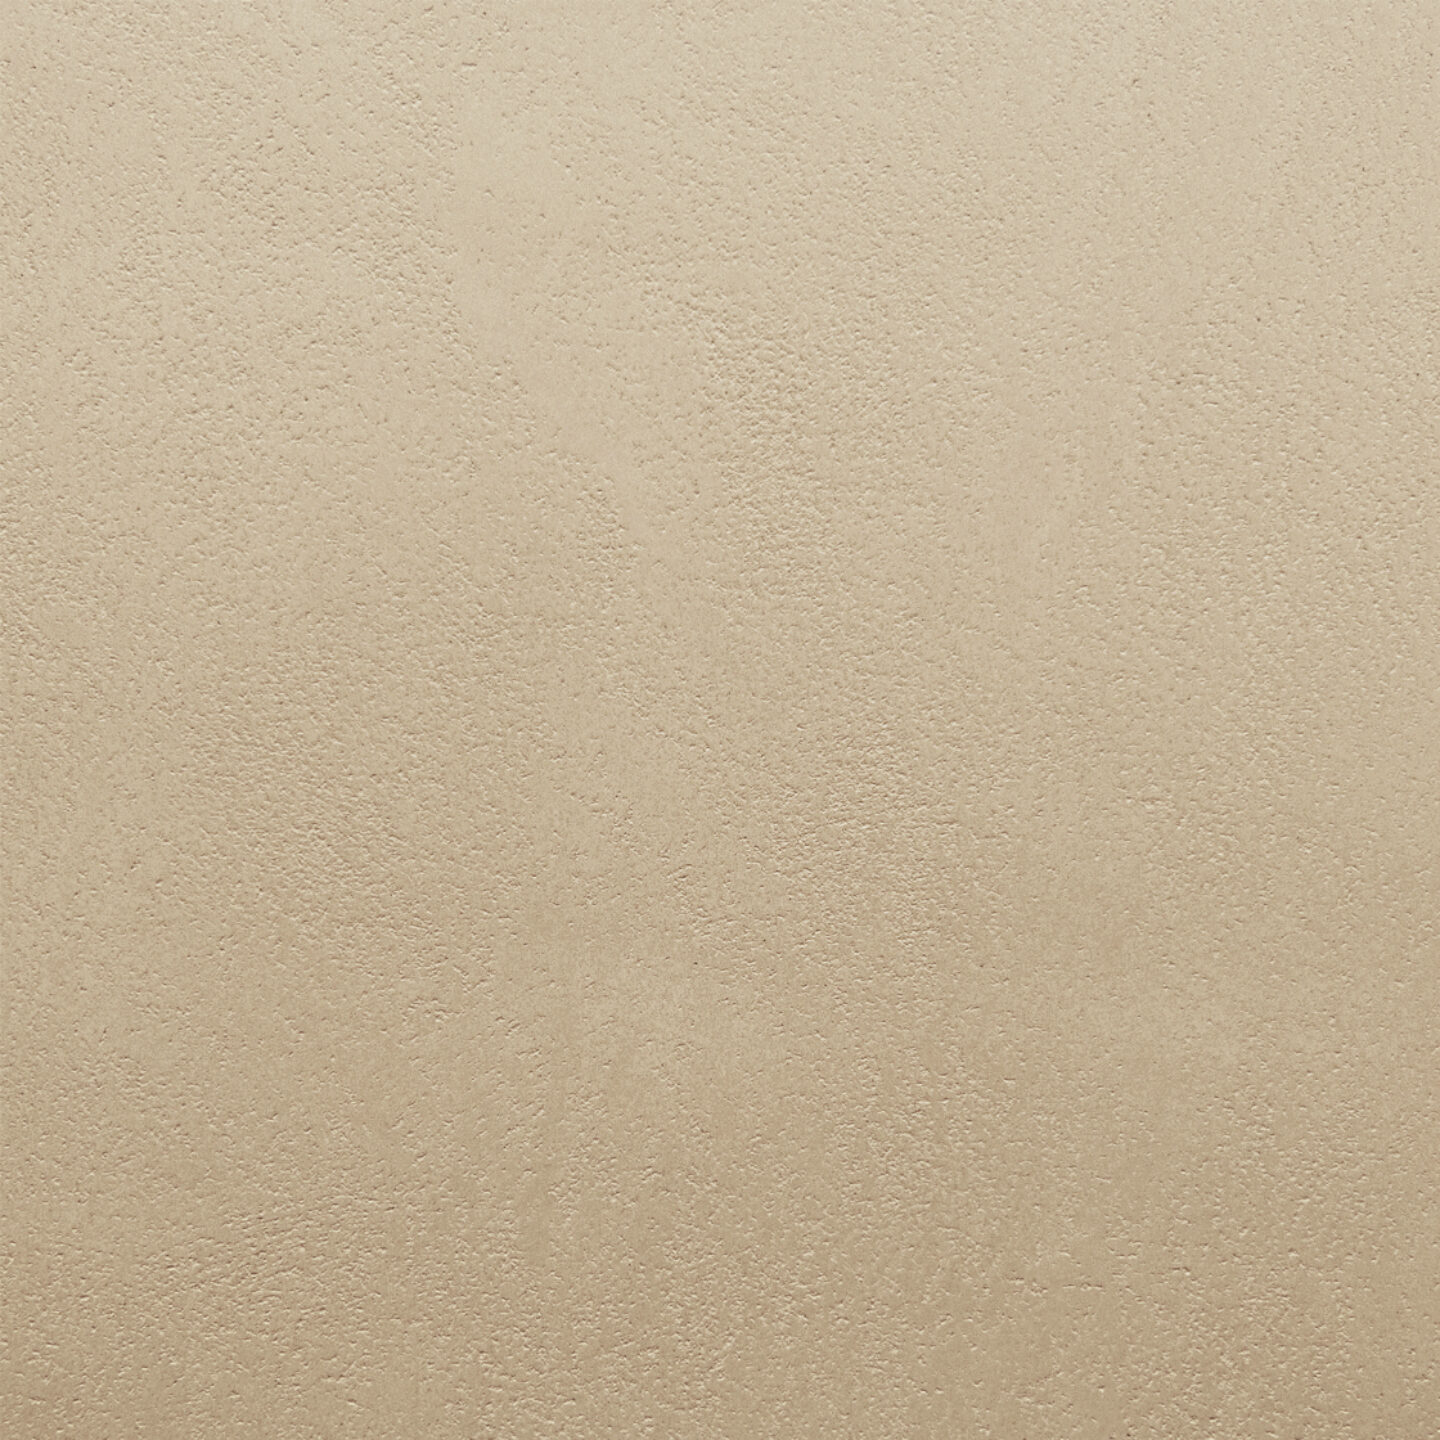 Close up of Armourcoat leatherstone exterior polished plaster finish - 53